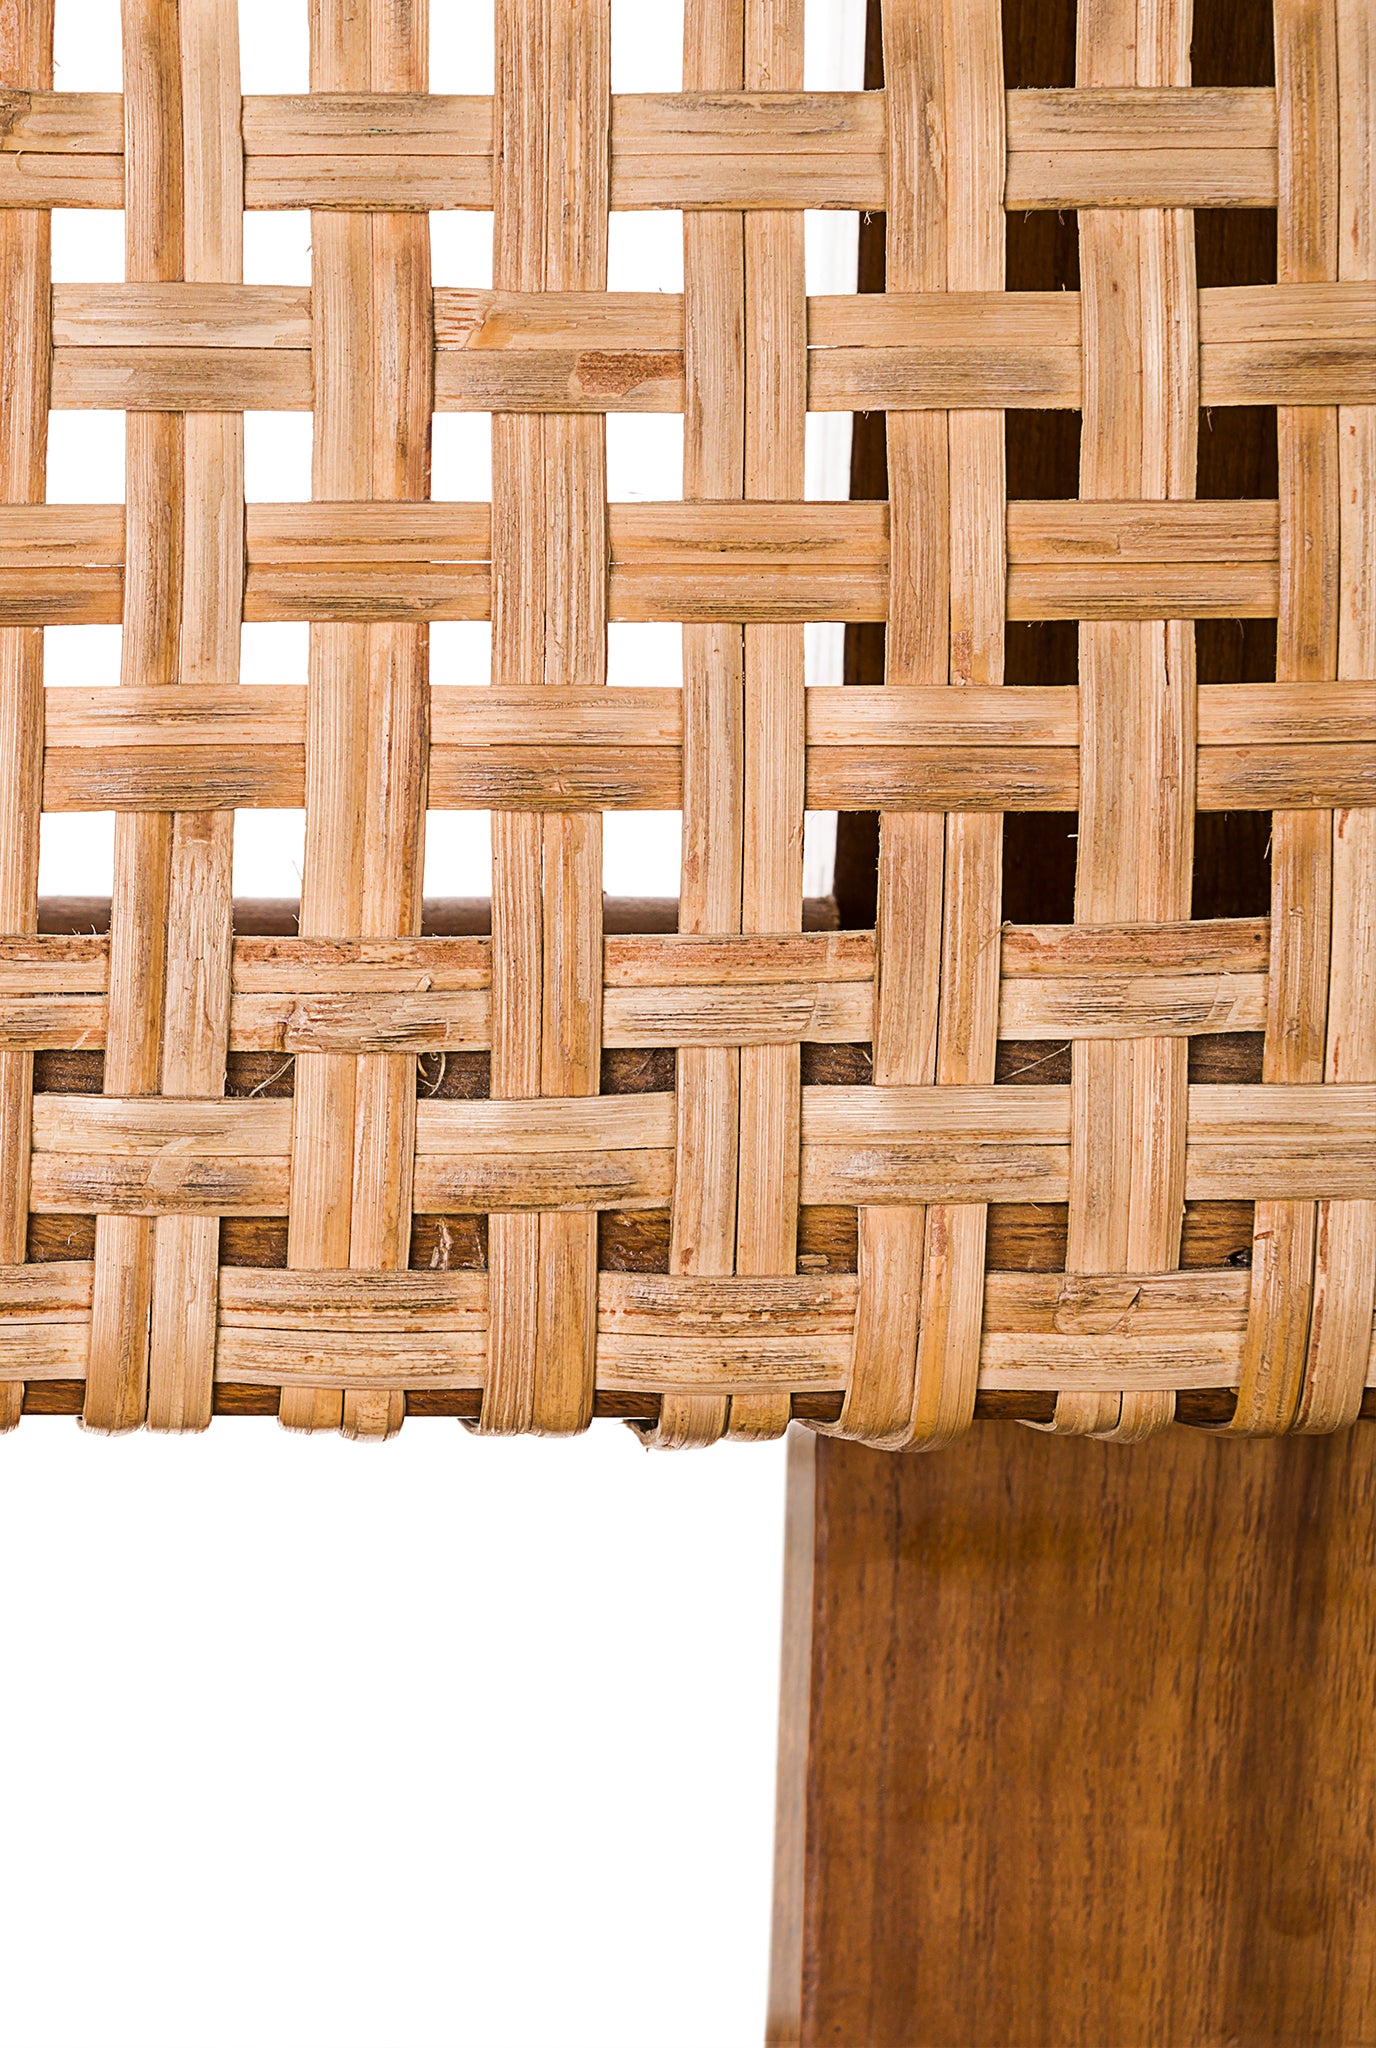 handcrafted-cane weaving-teak wood chair-jodi